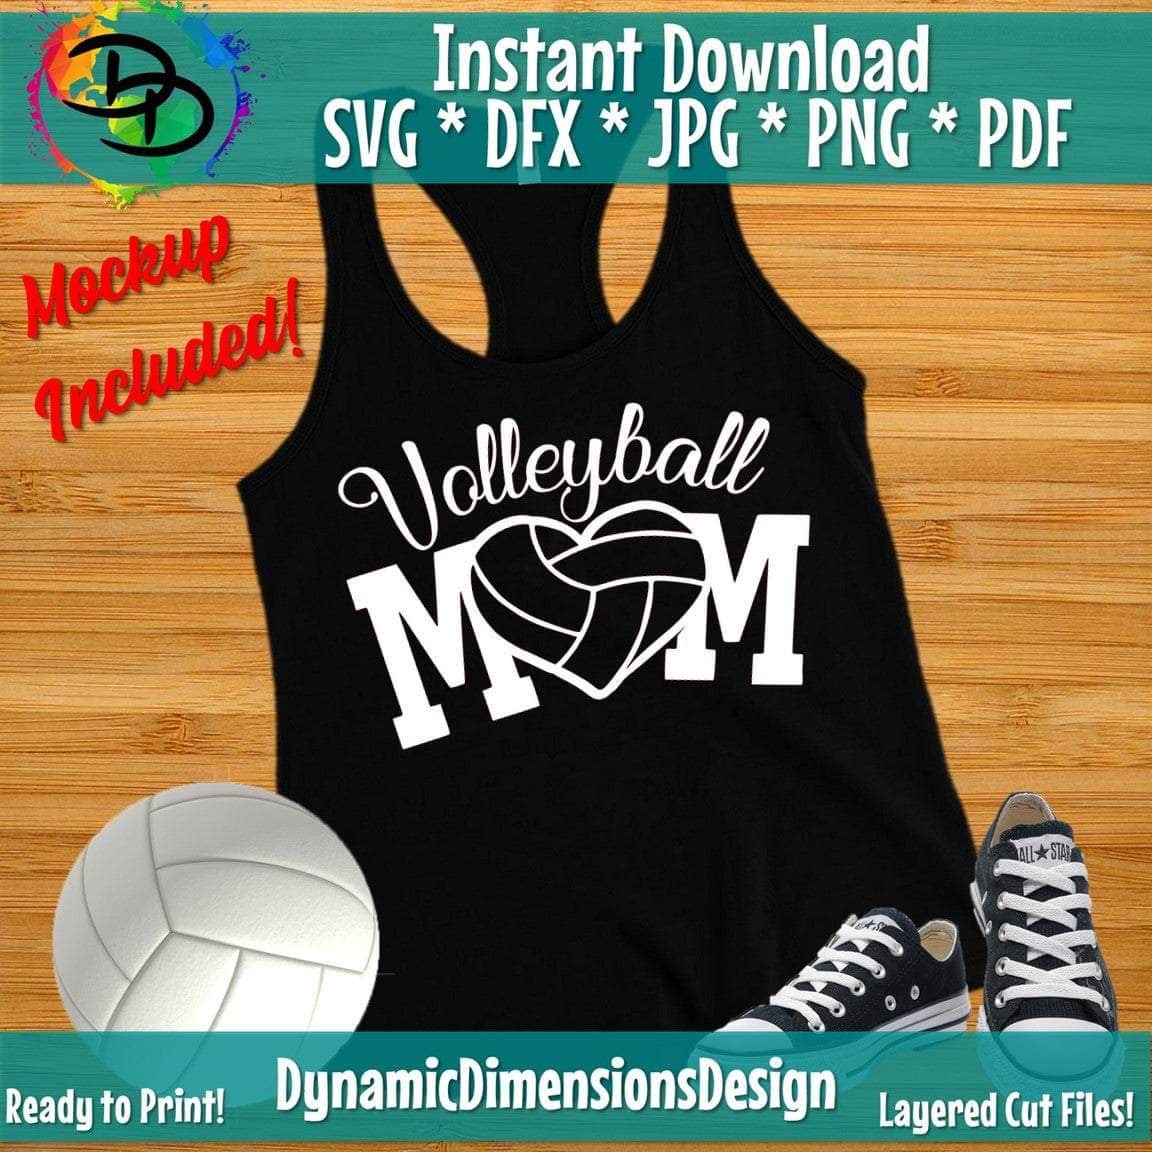 Volleyball mom